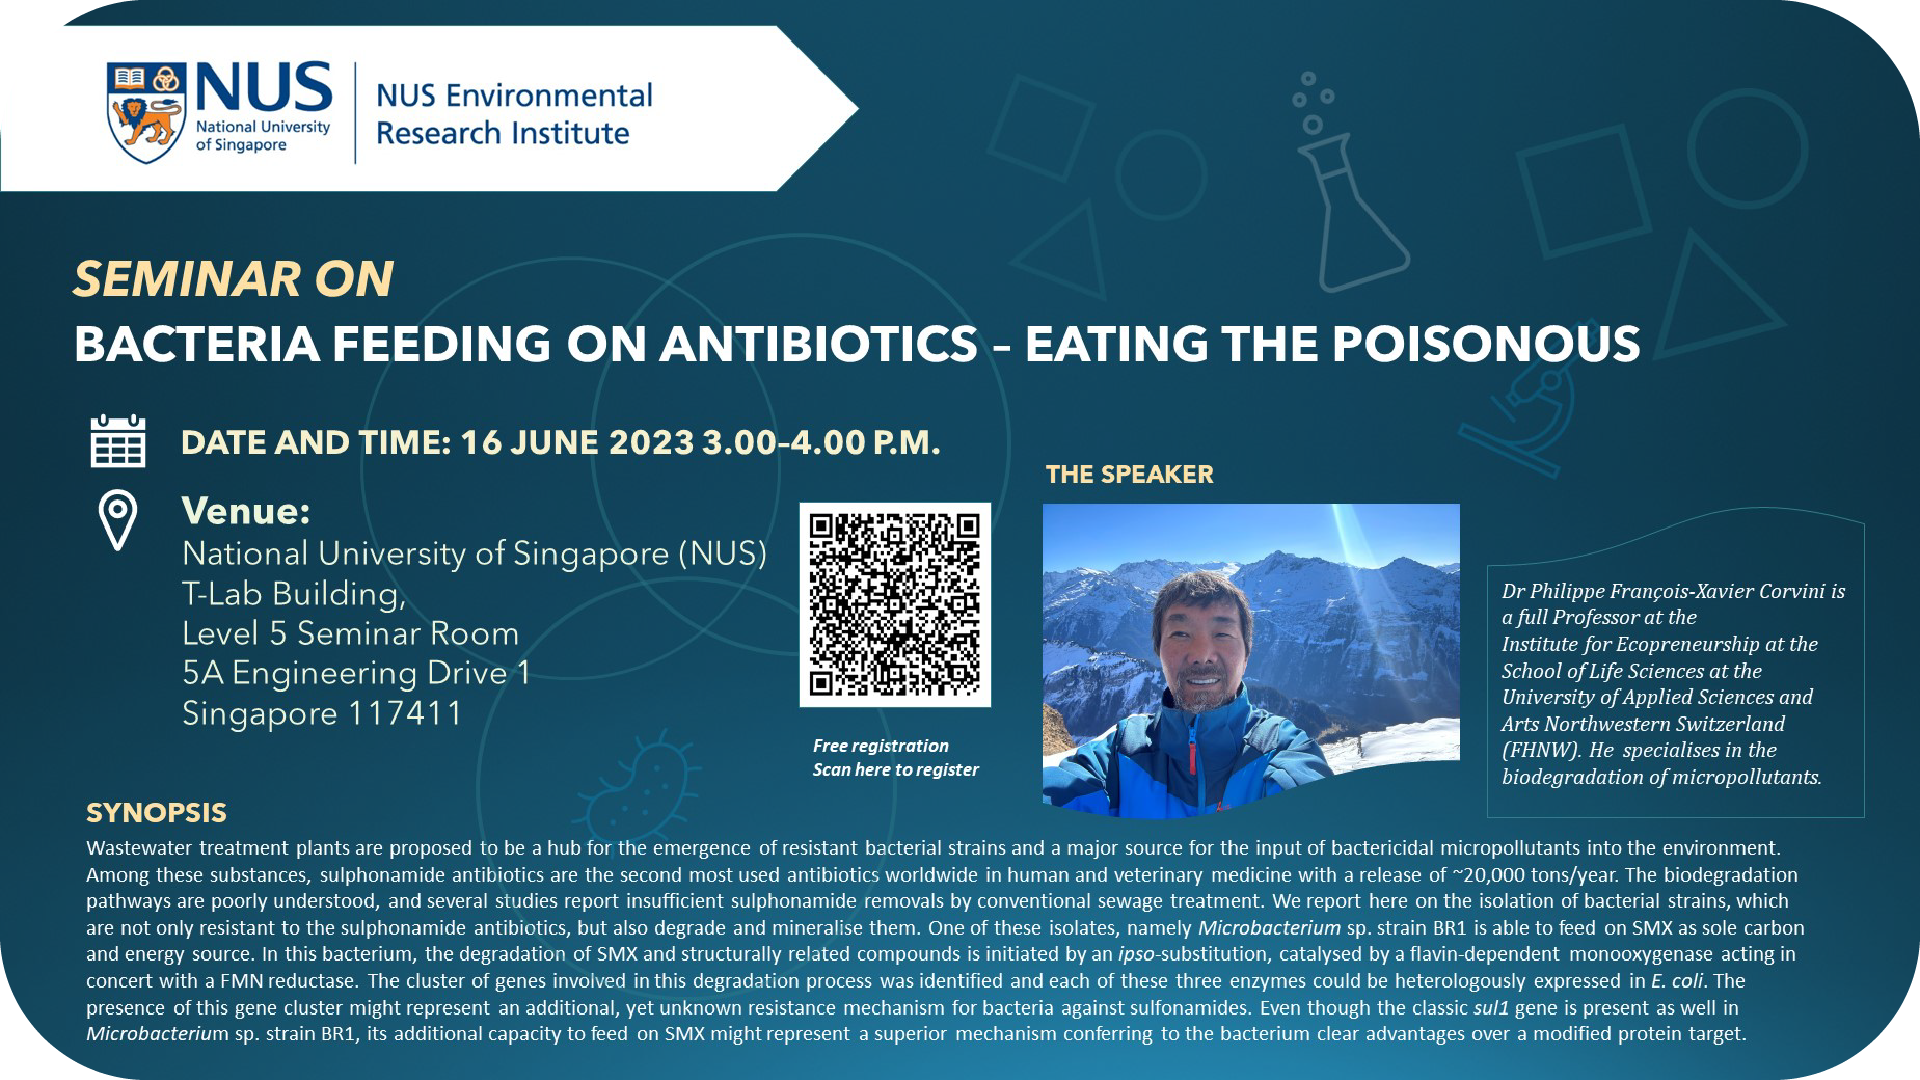 Seminar on Bacteria Feeding on Antibiotics - Eating the Poisonous